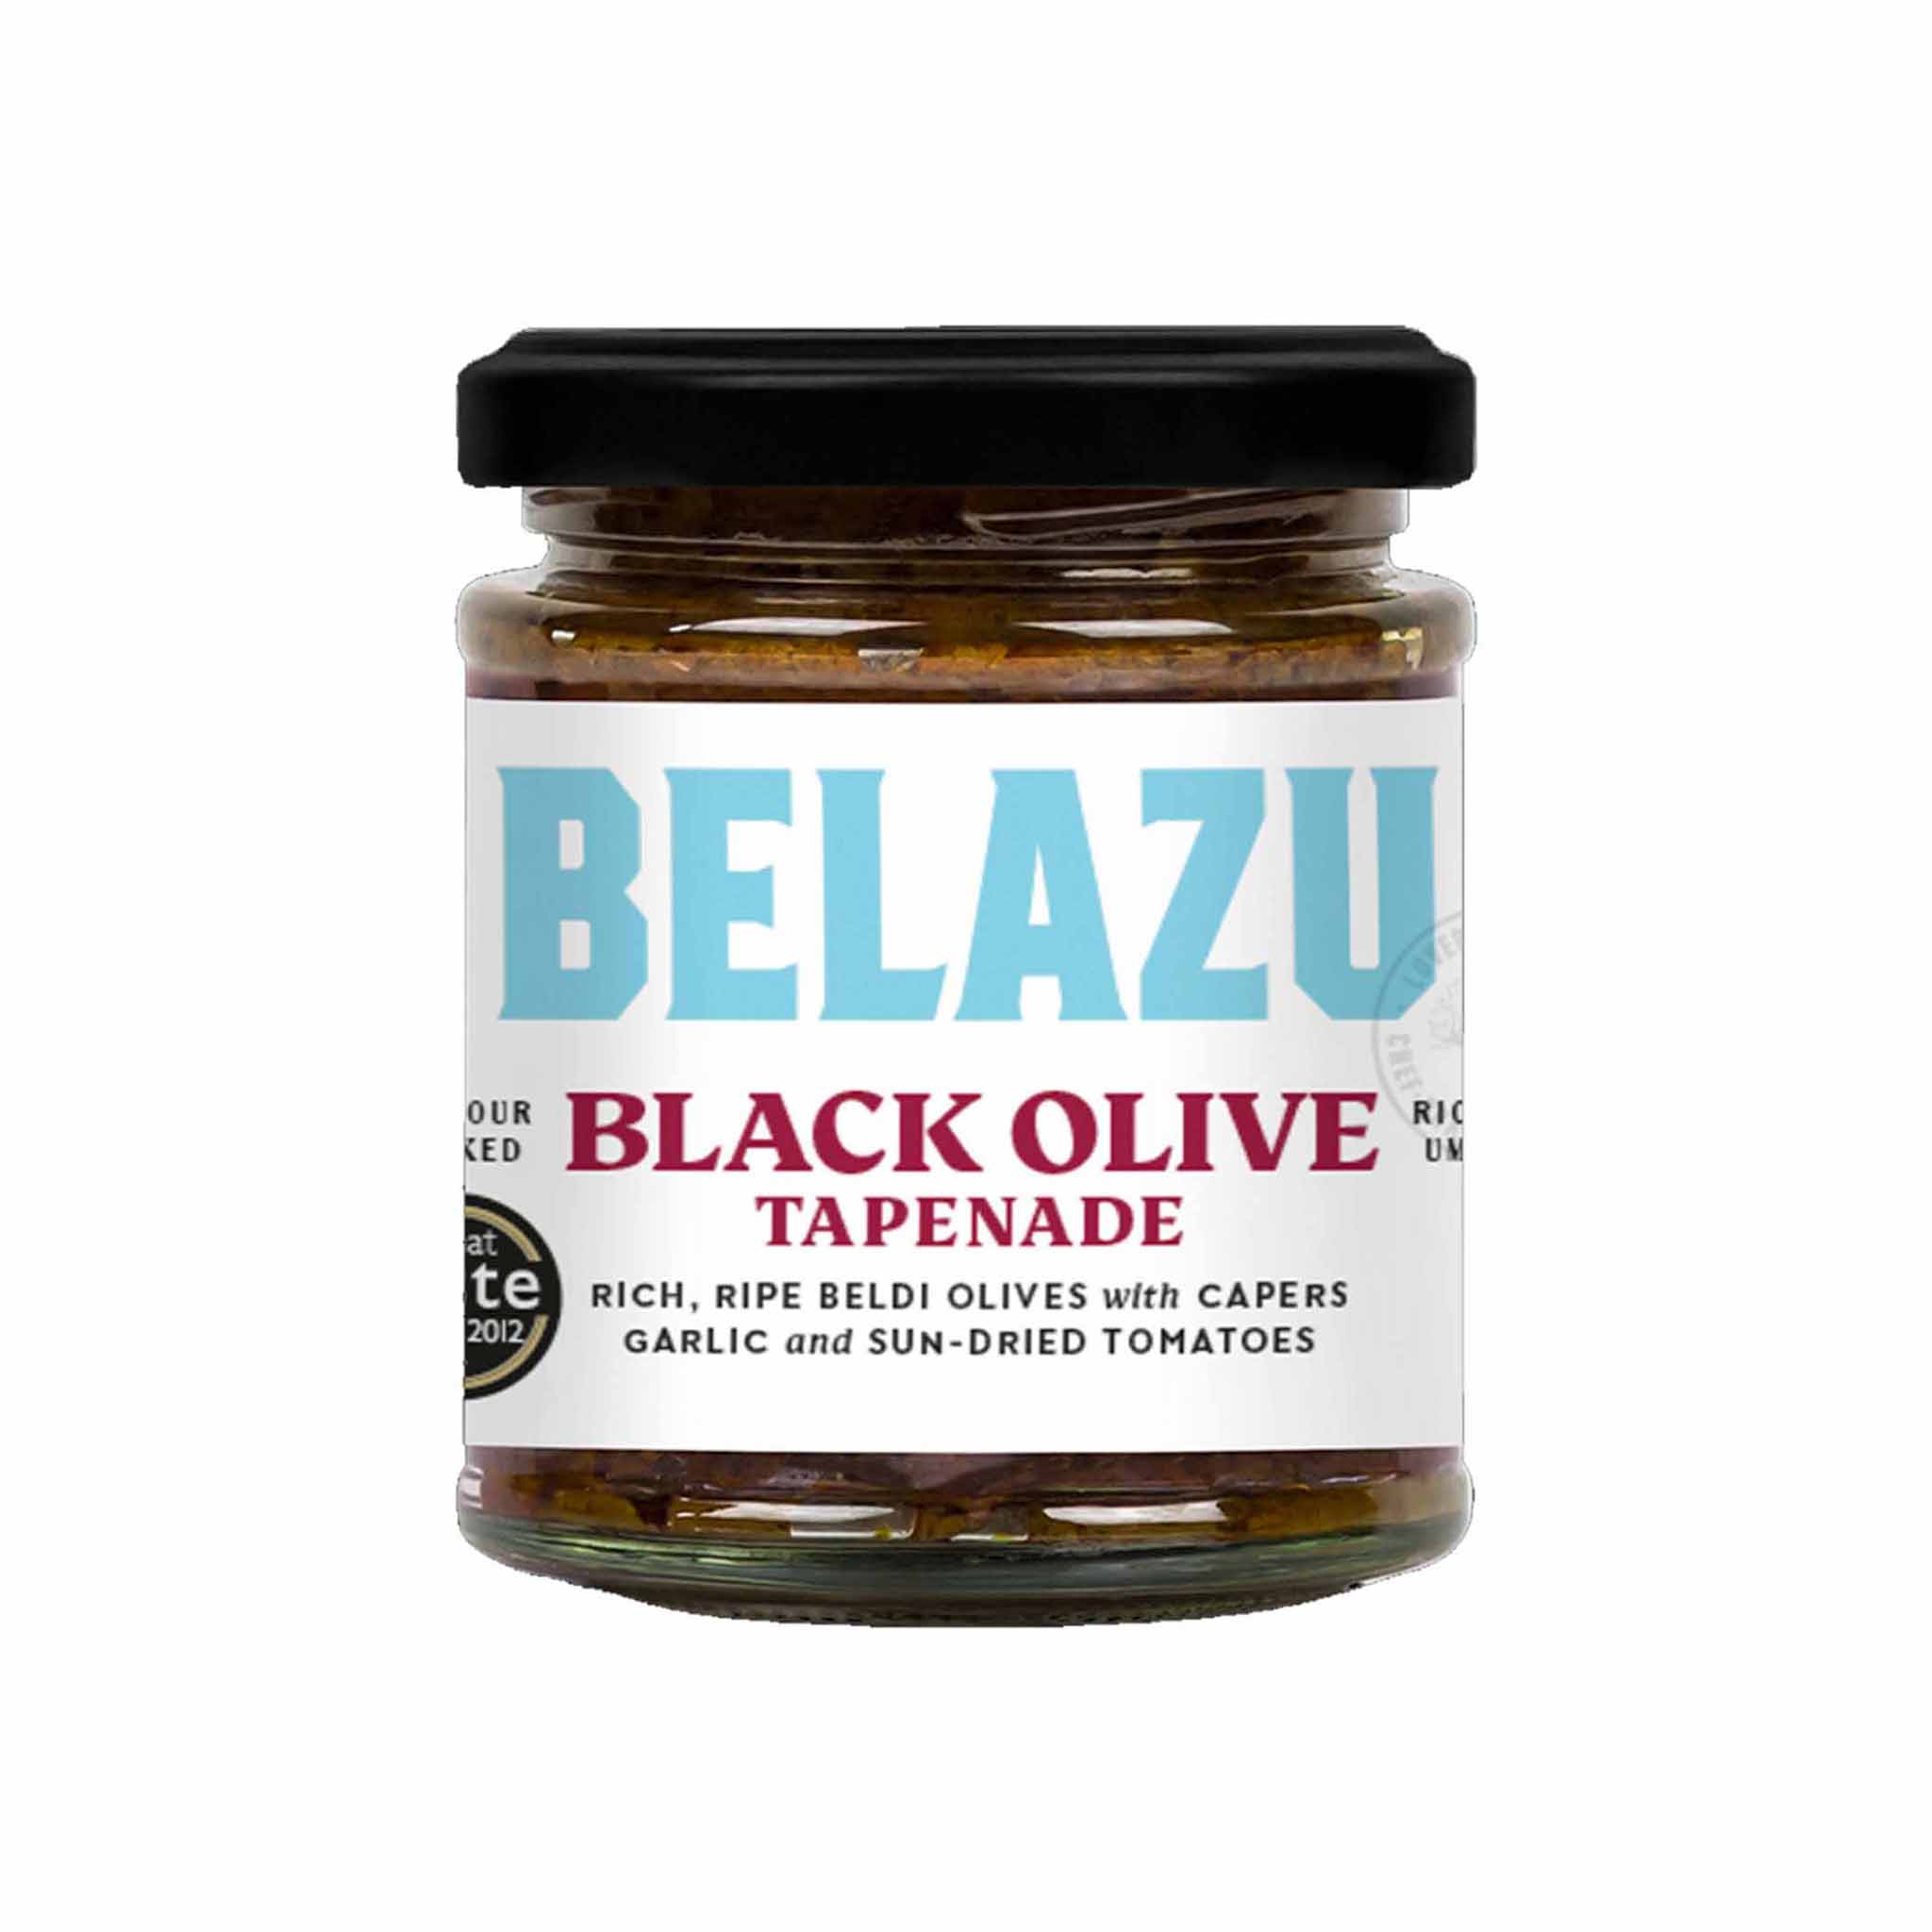 BELAZU BLACK OLIVE TAPENADE 170g